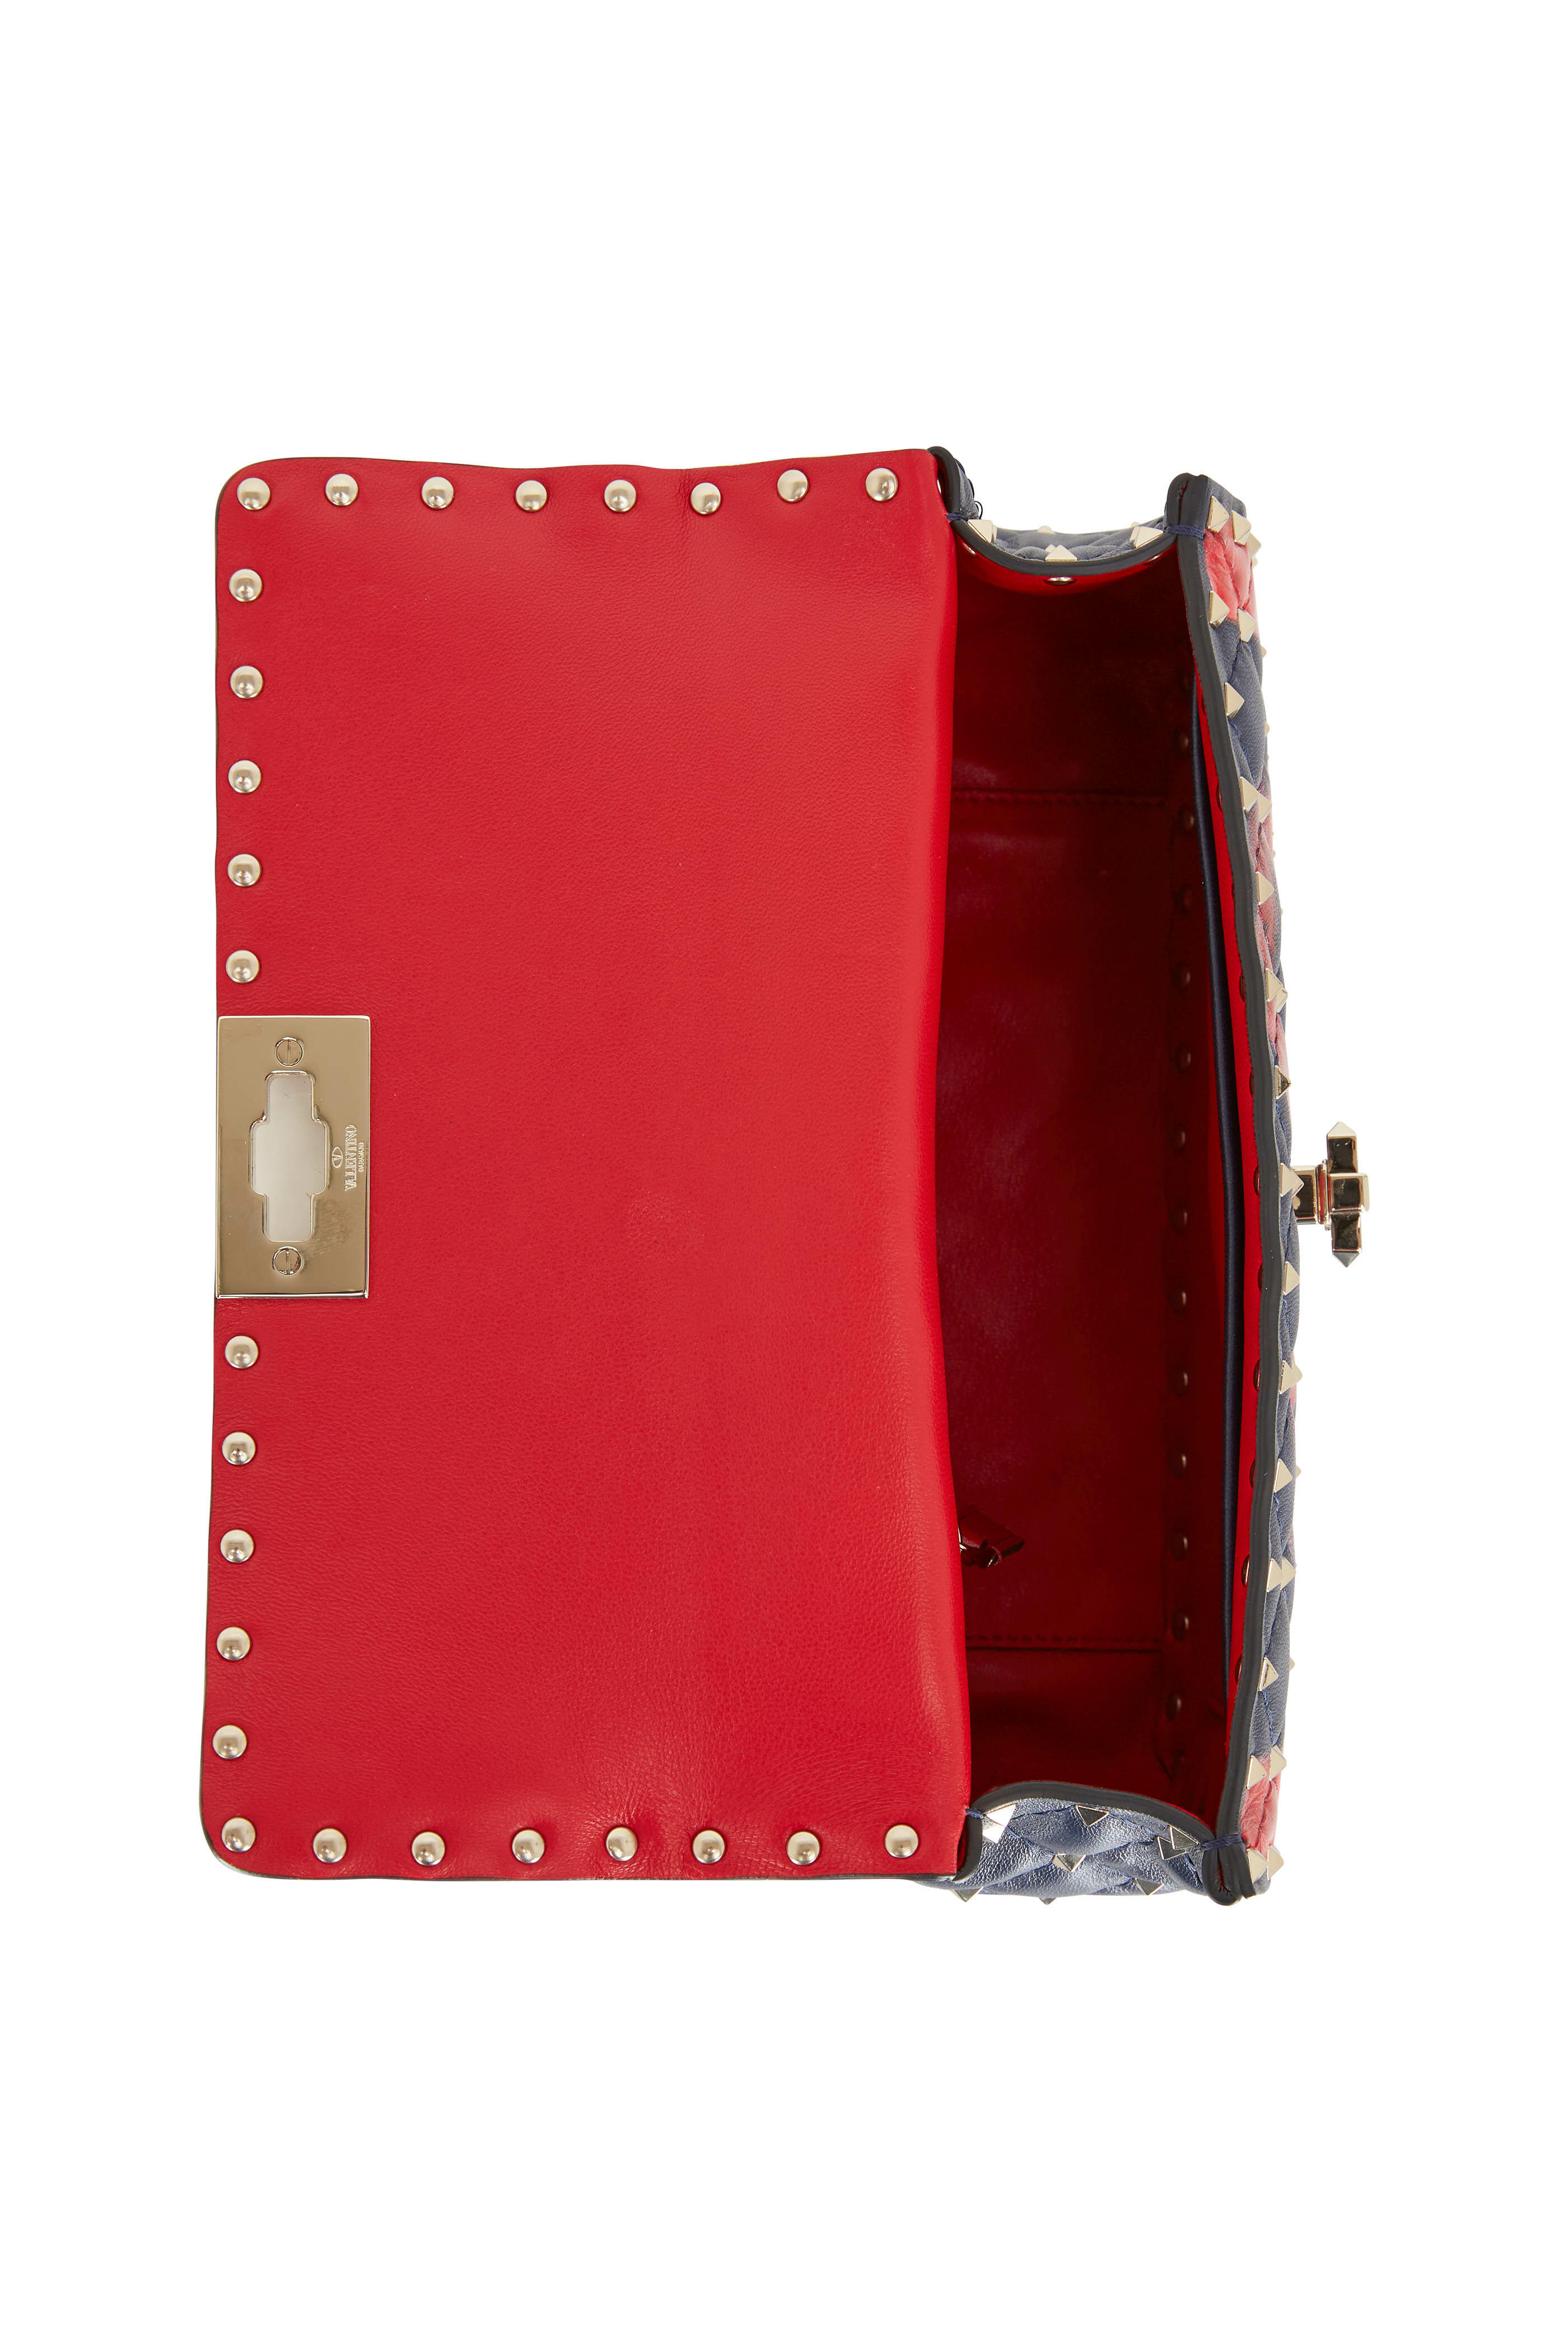 Valentino Garavani - Rockstud Spike It Marine & Red Heart Shoulder Bag